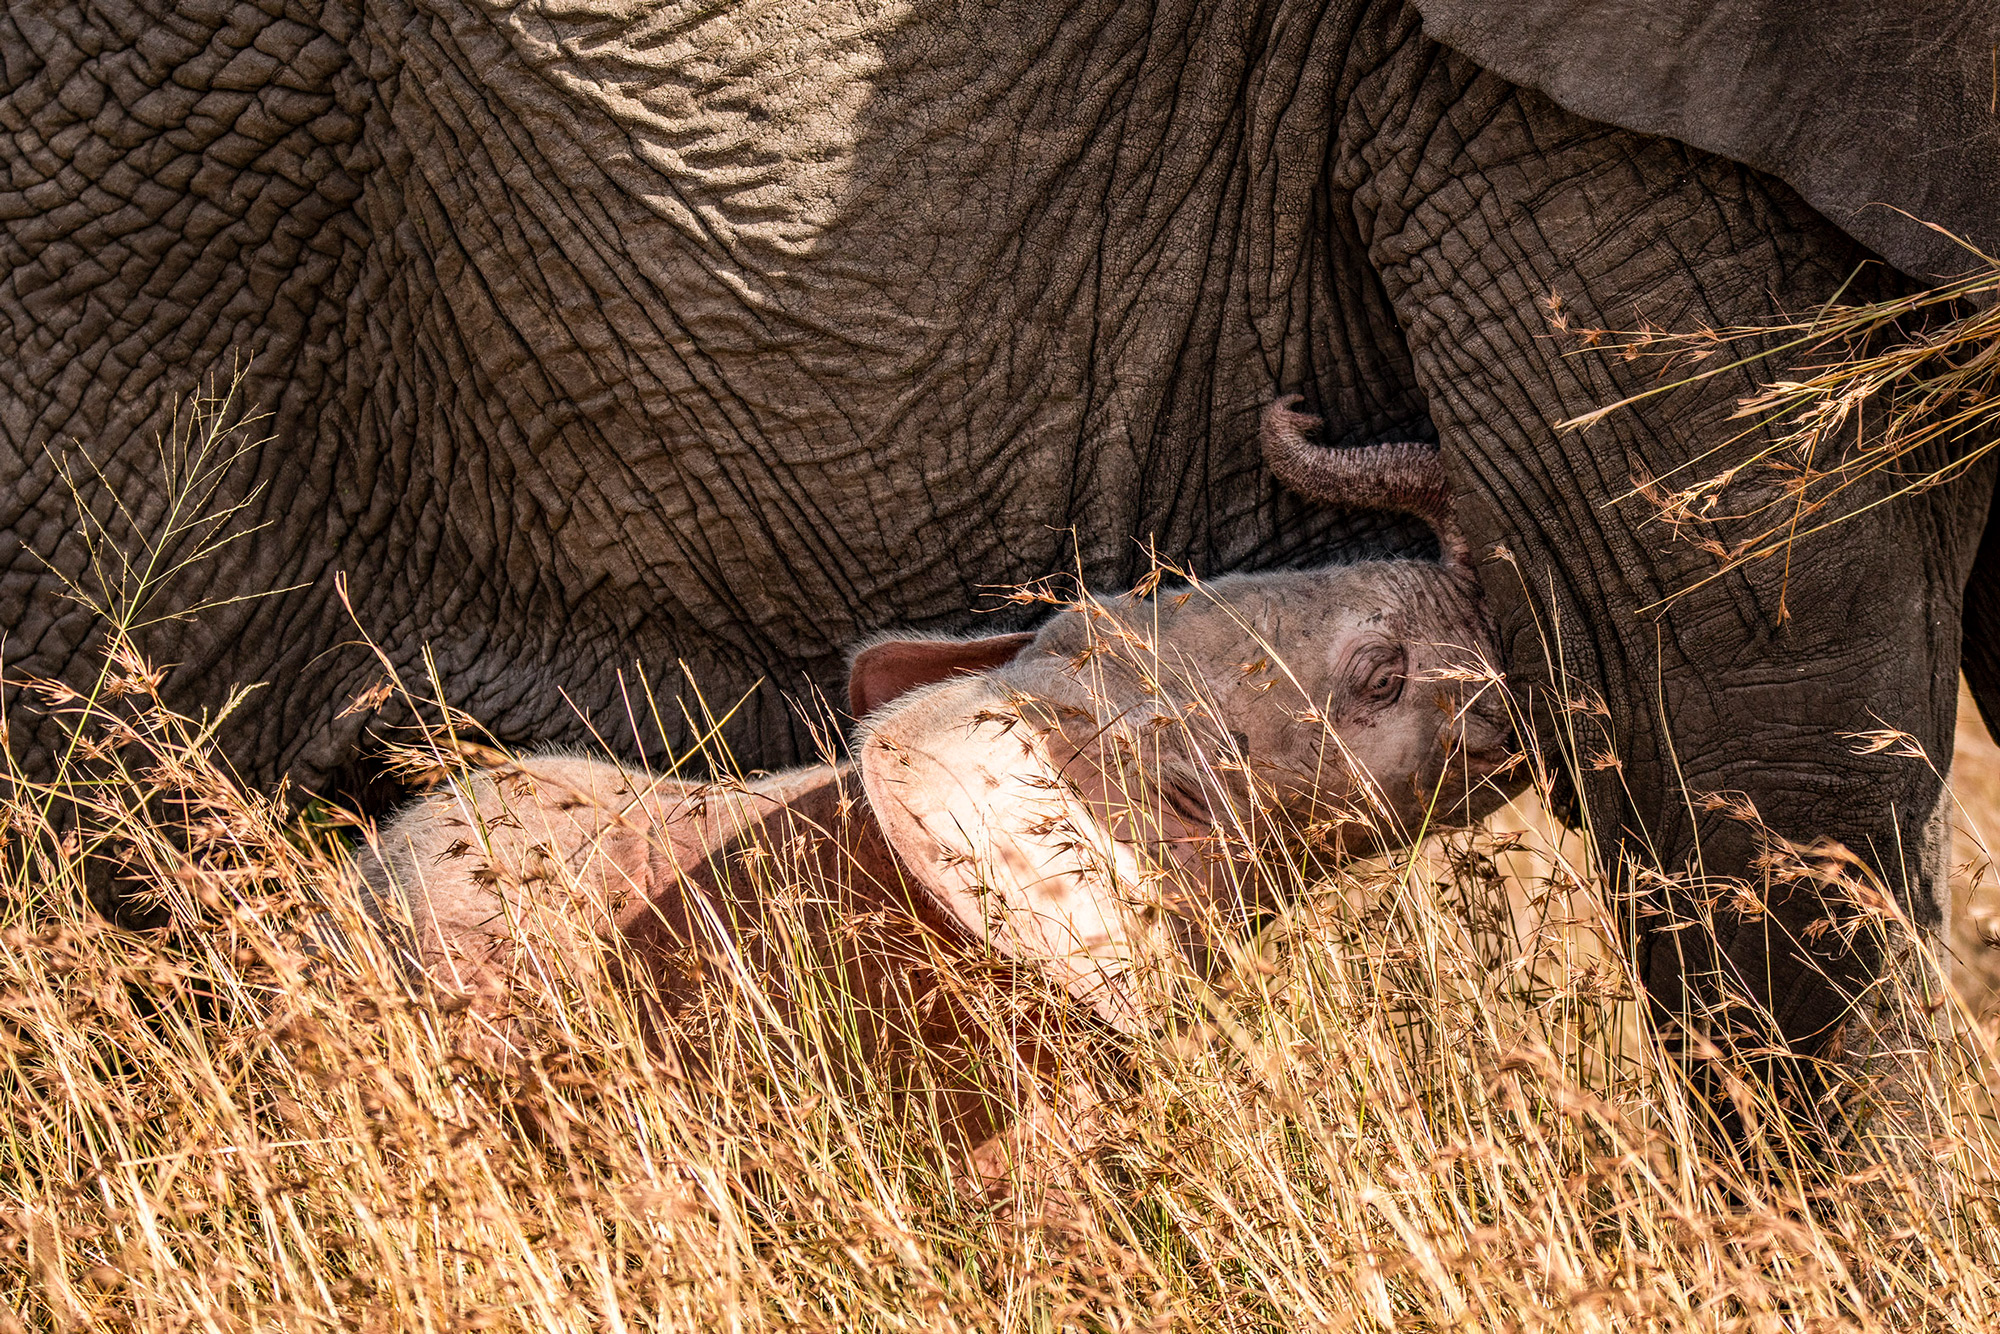 A leucistic elephant calf spotted in Maasai Mara National Reserve, Kenya